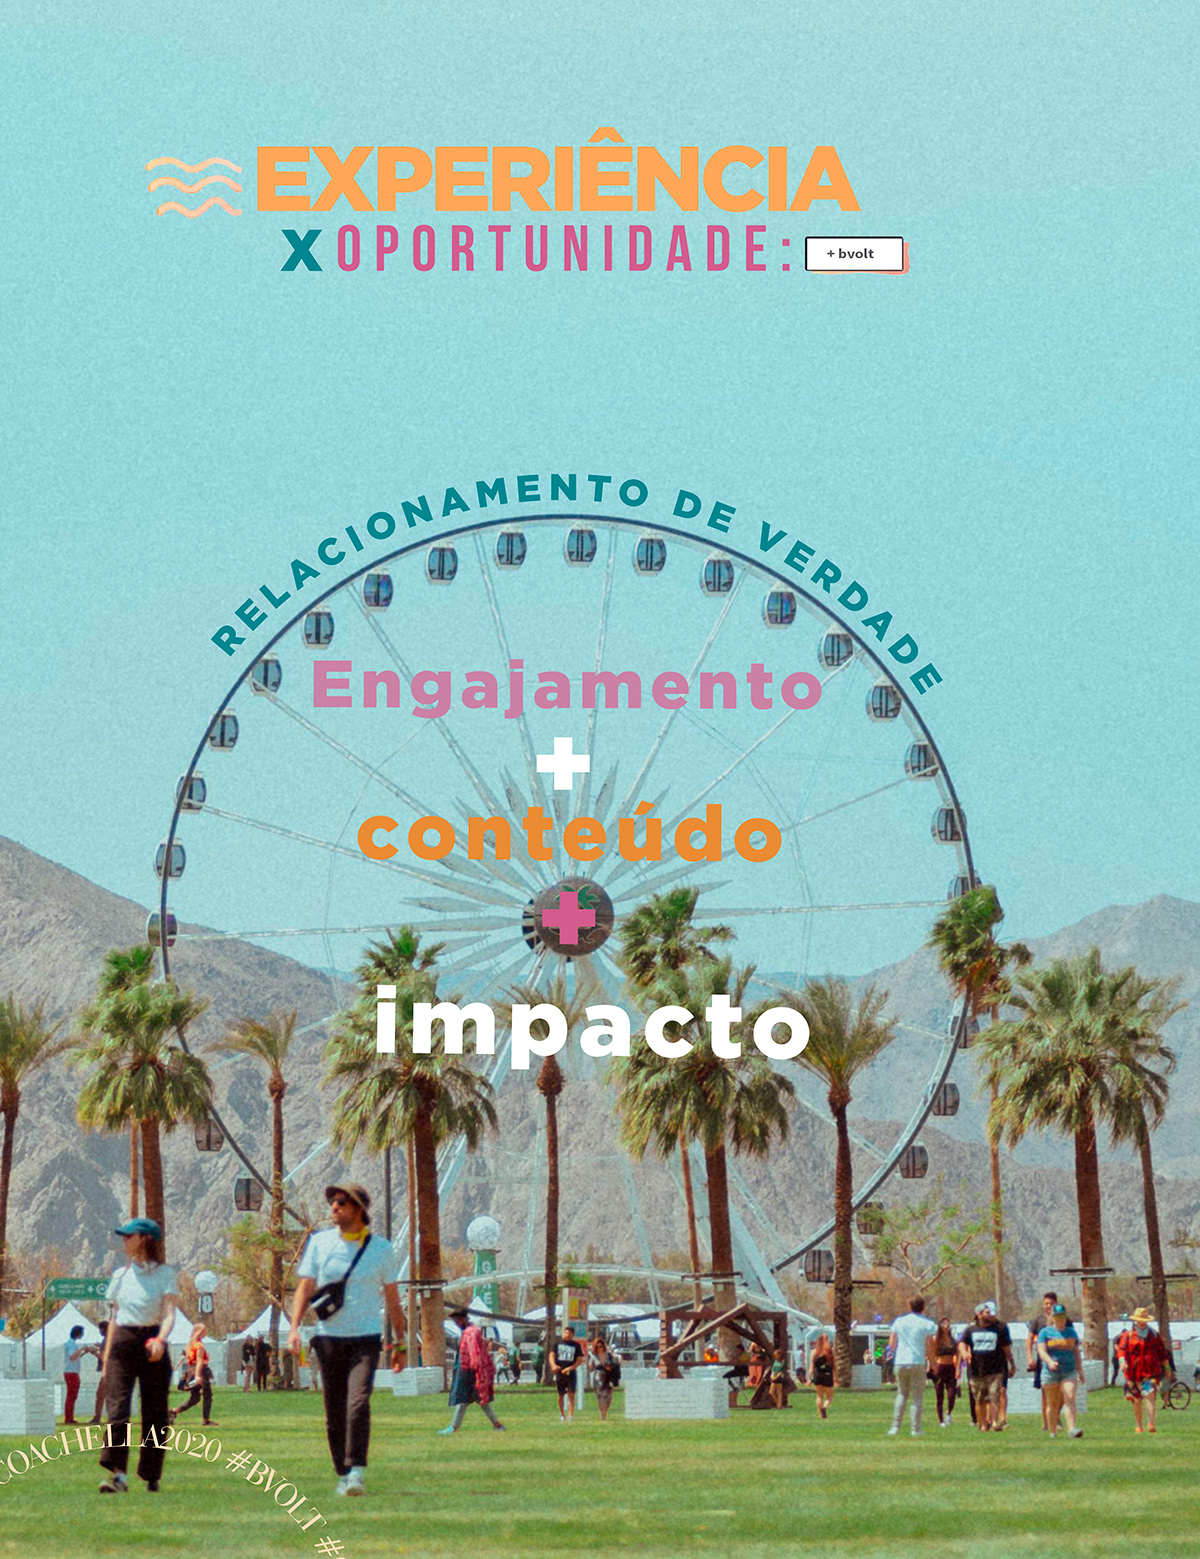 bloggers coachella Digital Influencer festival influencers projeto de viagem Travel Project trip project